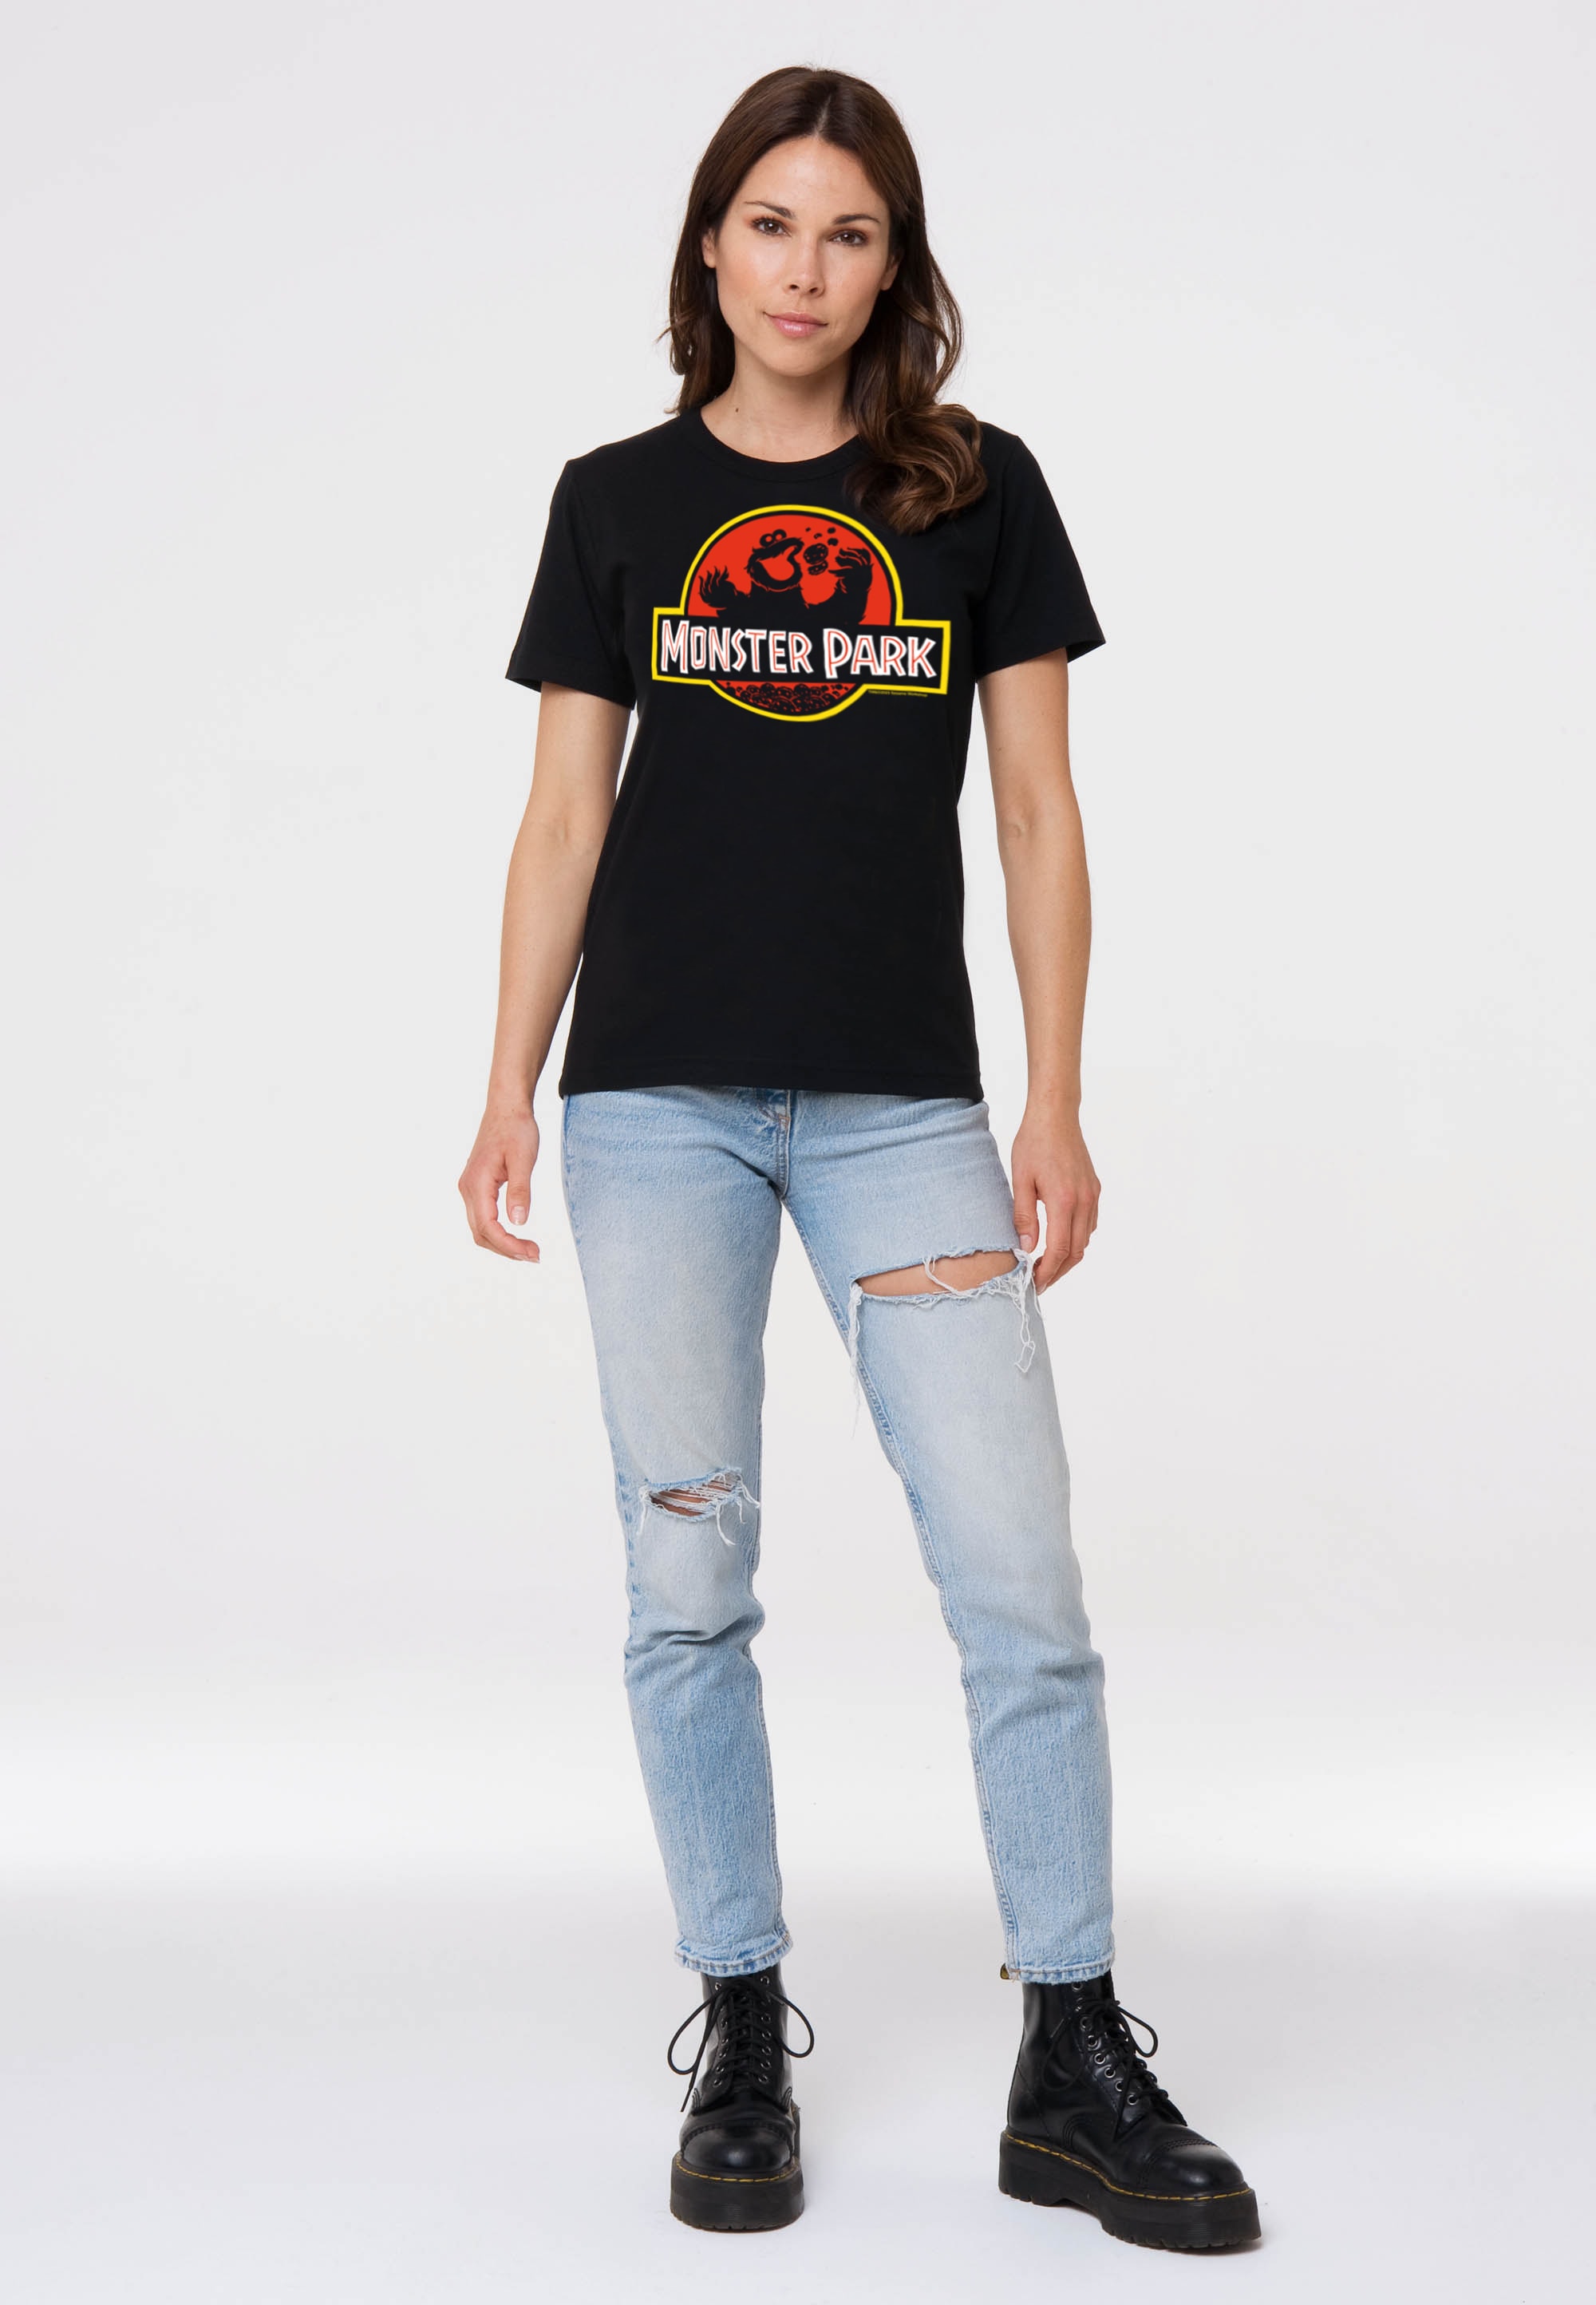 Krümelmonster coolem Monster T-Shirt mit LOGOSHIRT Print kaufen »Sesamstrasse BAUR | Park«,